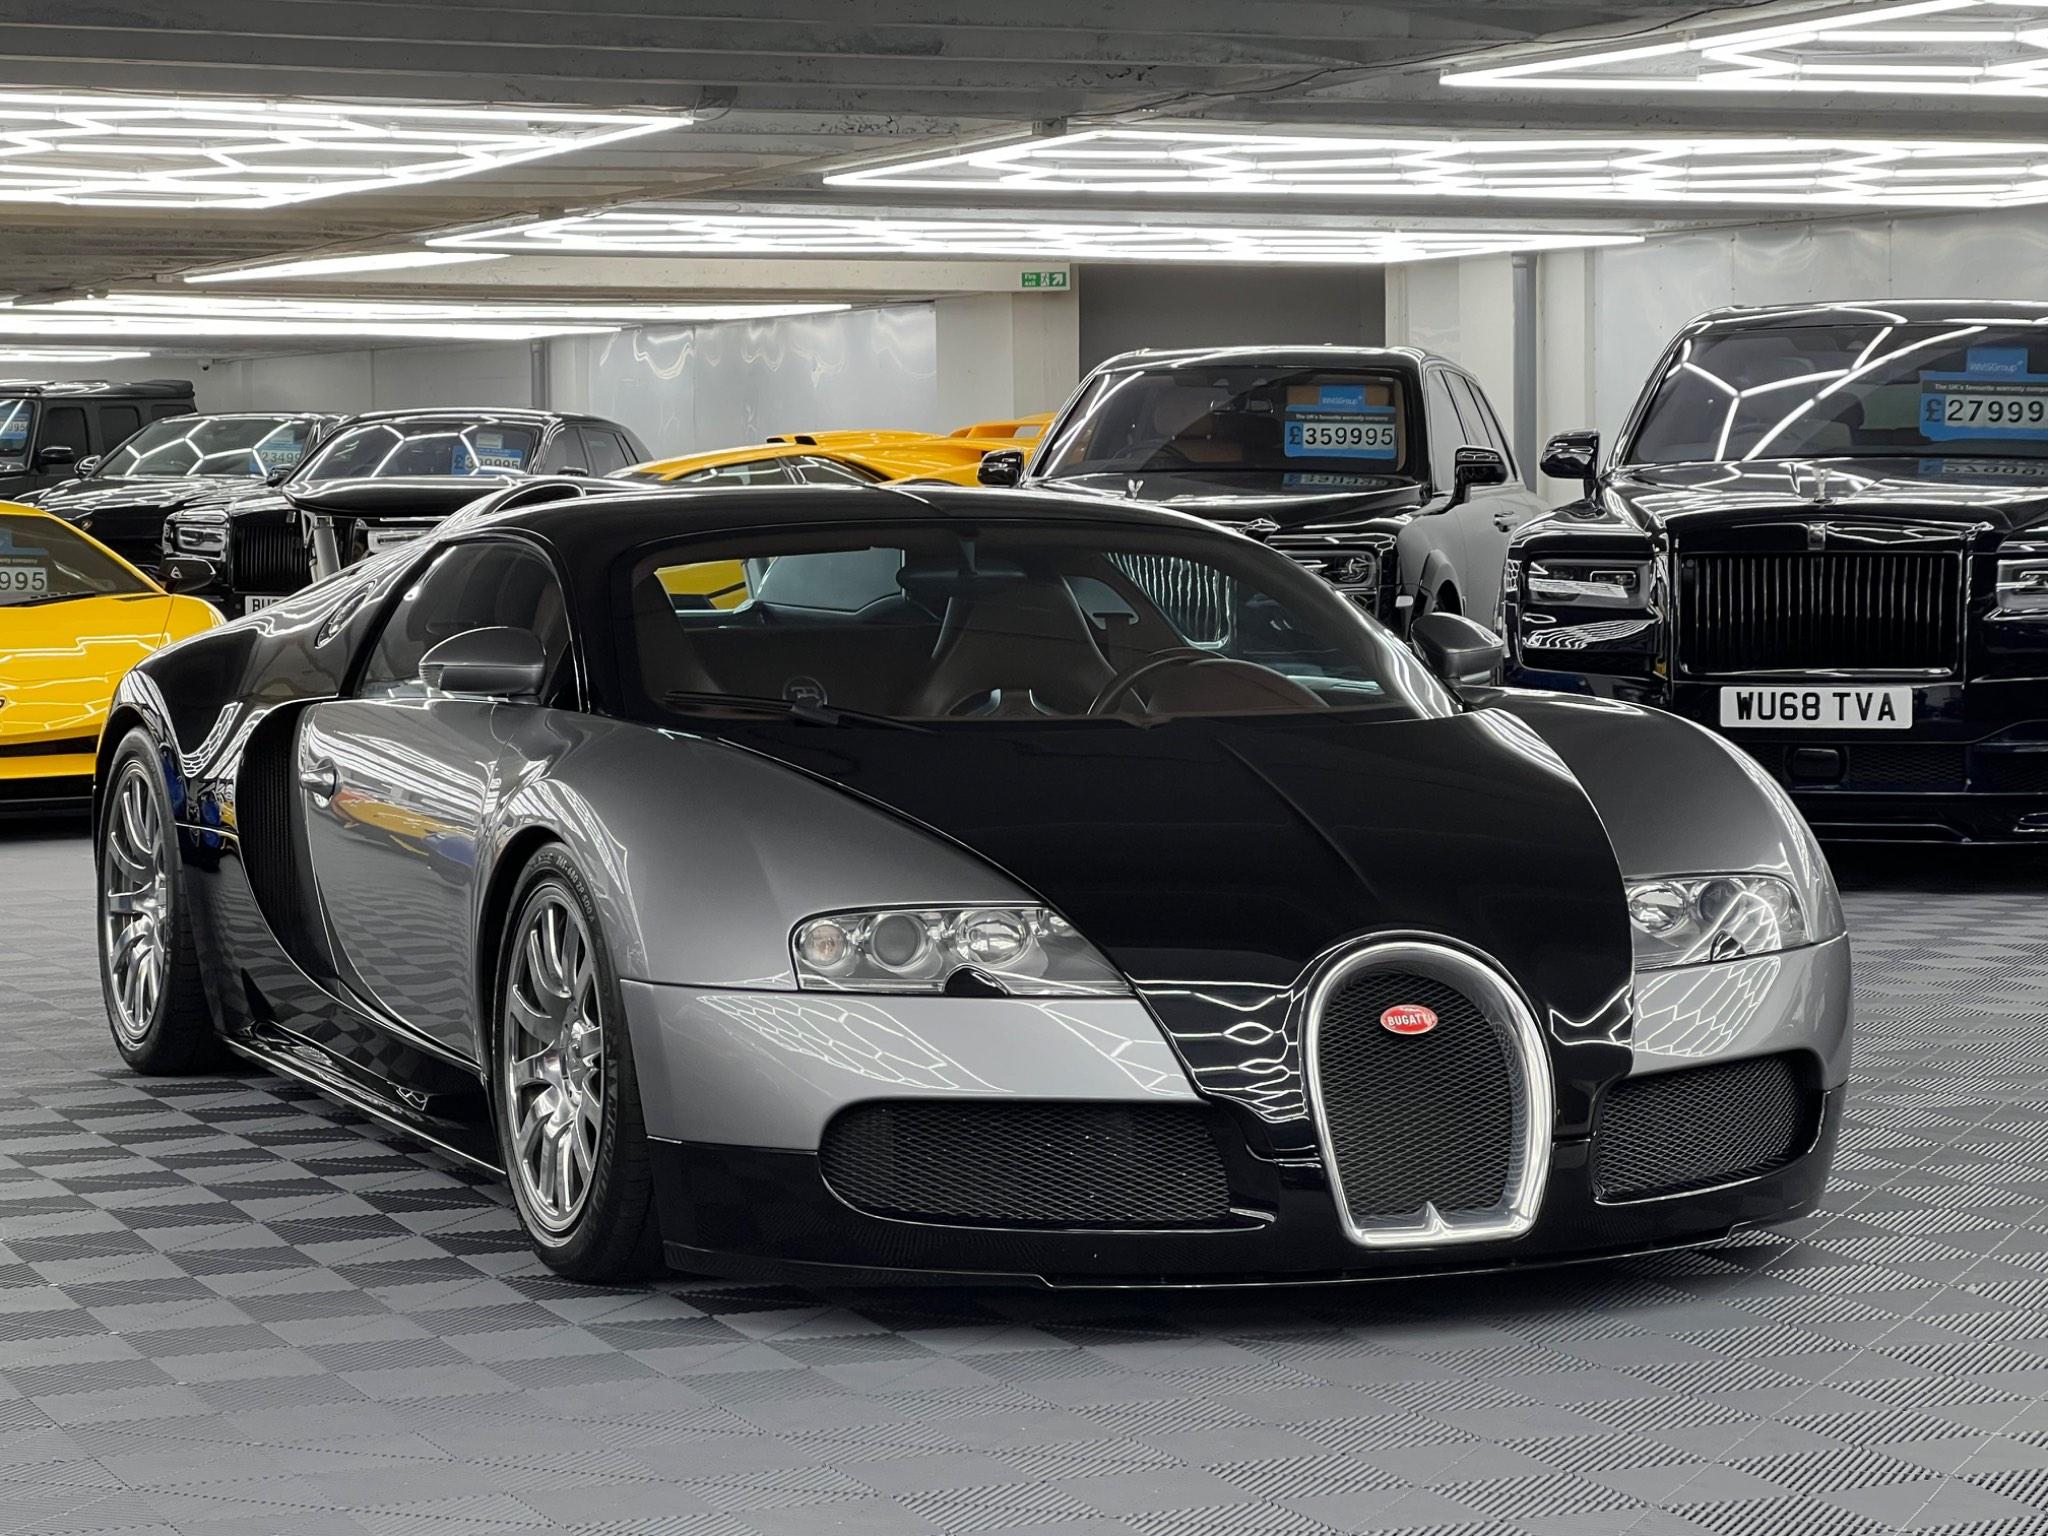 Used Bugatti Cars For Sale